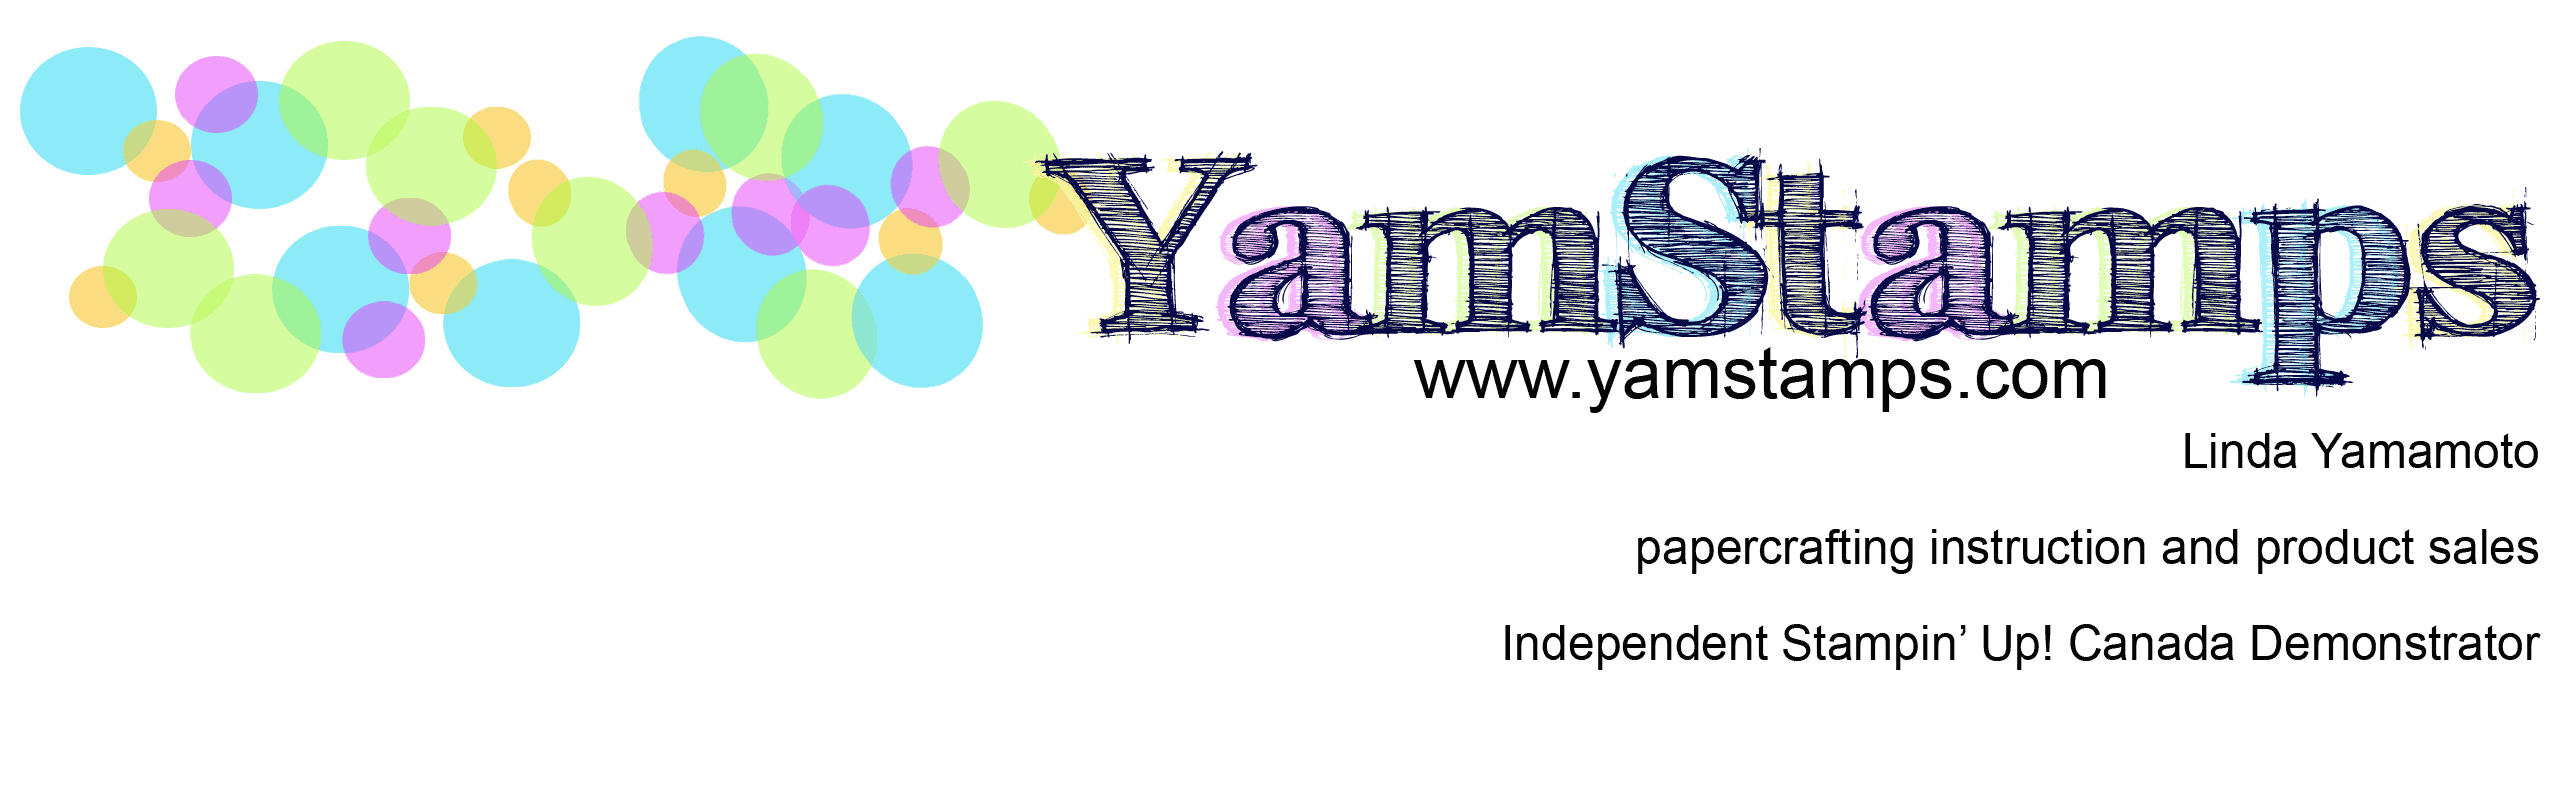 Yamstamps.com - Linda's Stamping Blog